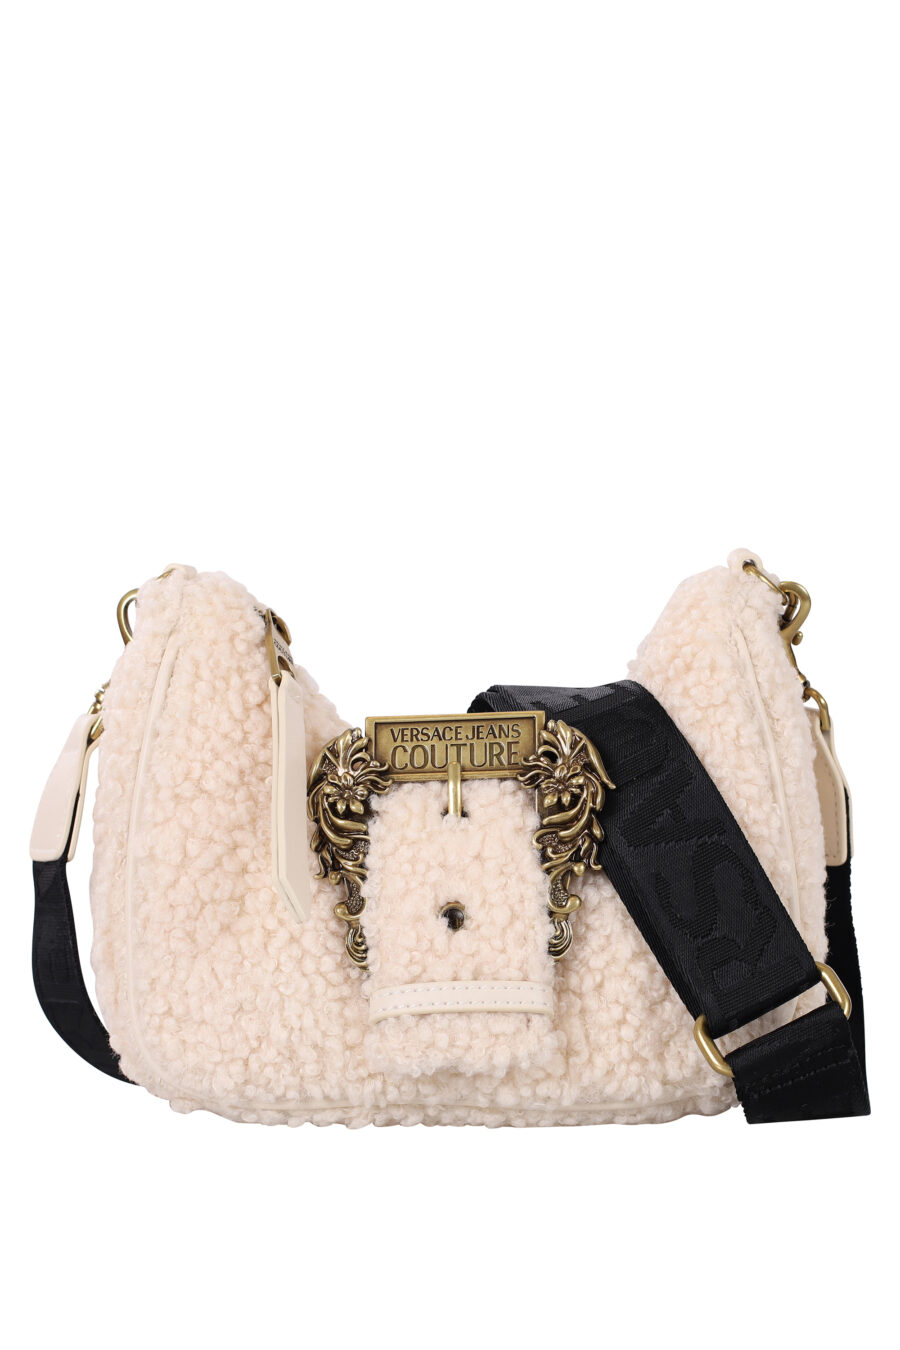 White sheepskin shoulder bag - IMG 0517